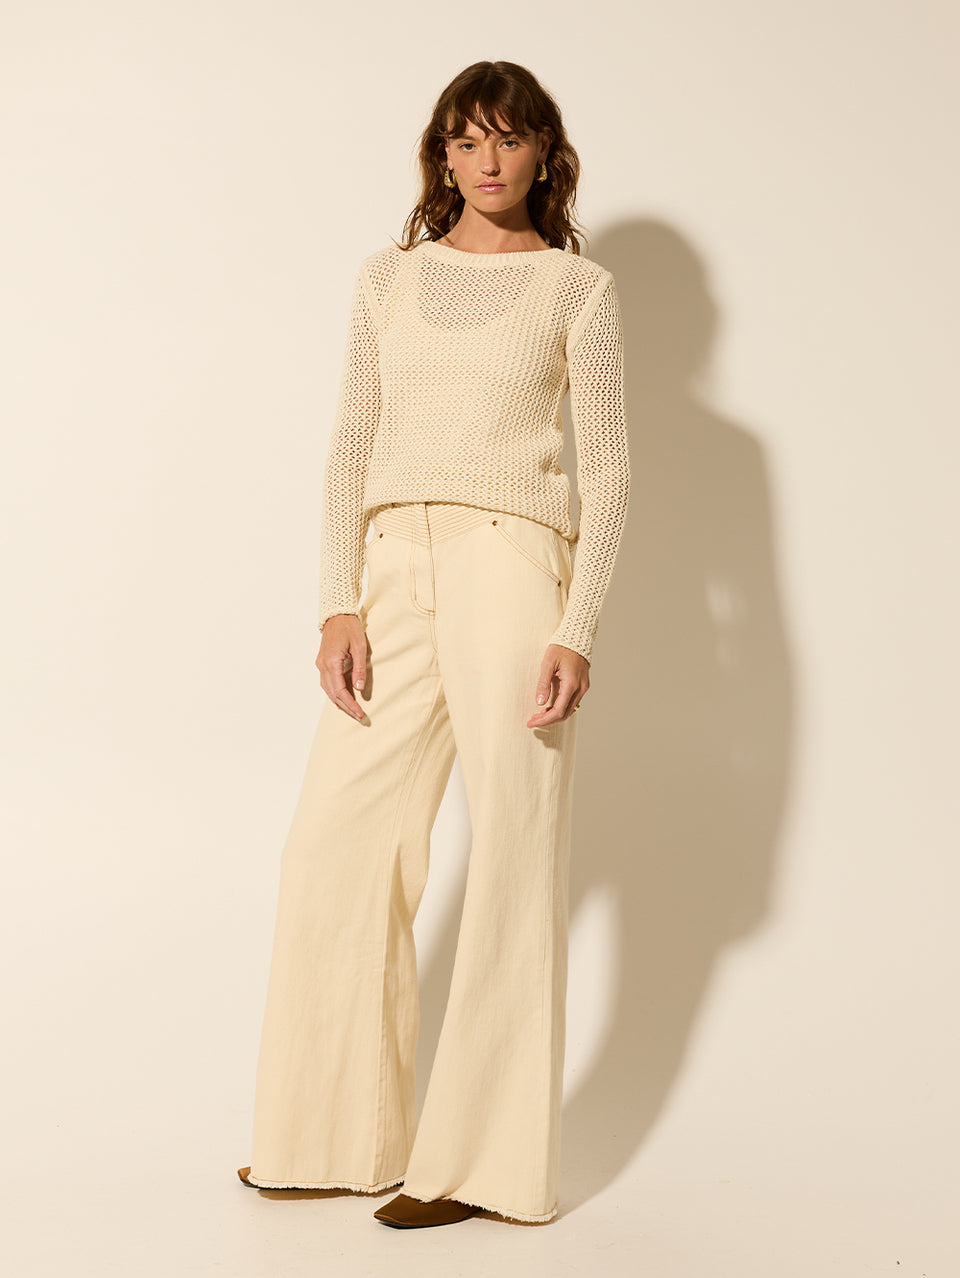 Eliana Knit Cream KIVARI | Model wears cream knit top